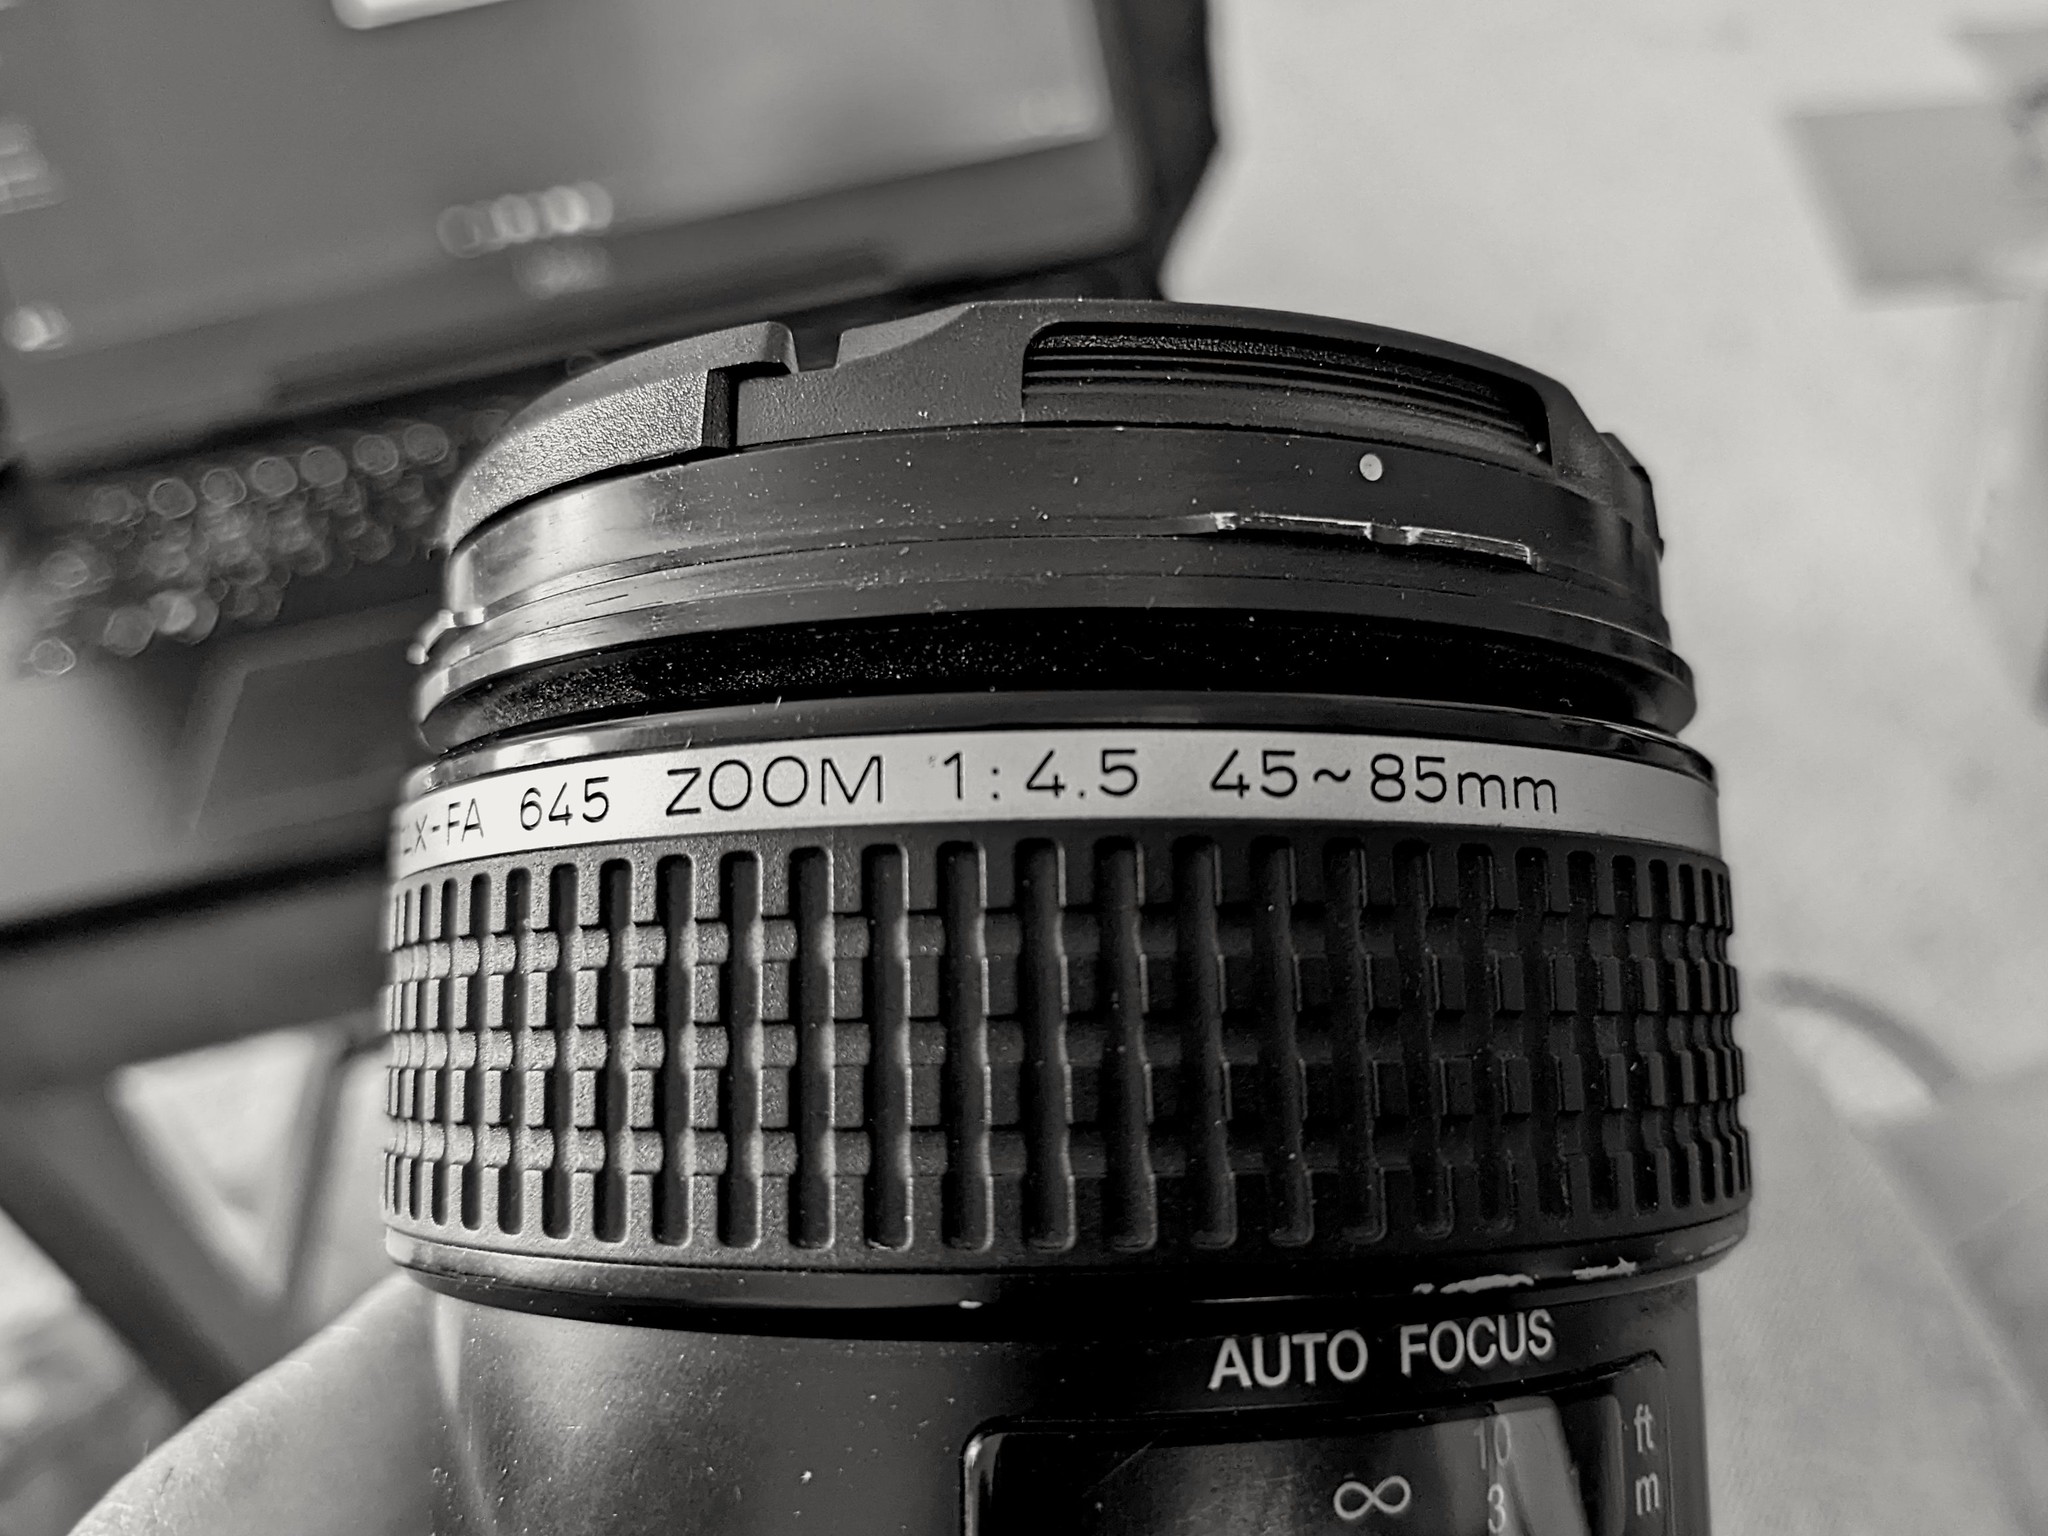 This Old Lens (Medium Format): SMC Pentax-FA 645 45-85mm F4.5